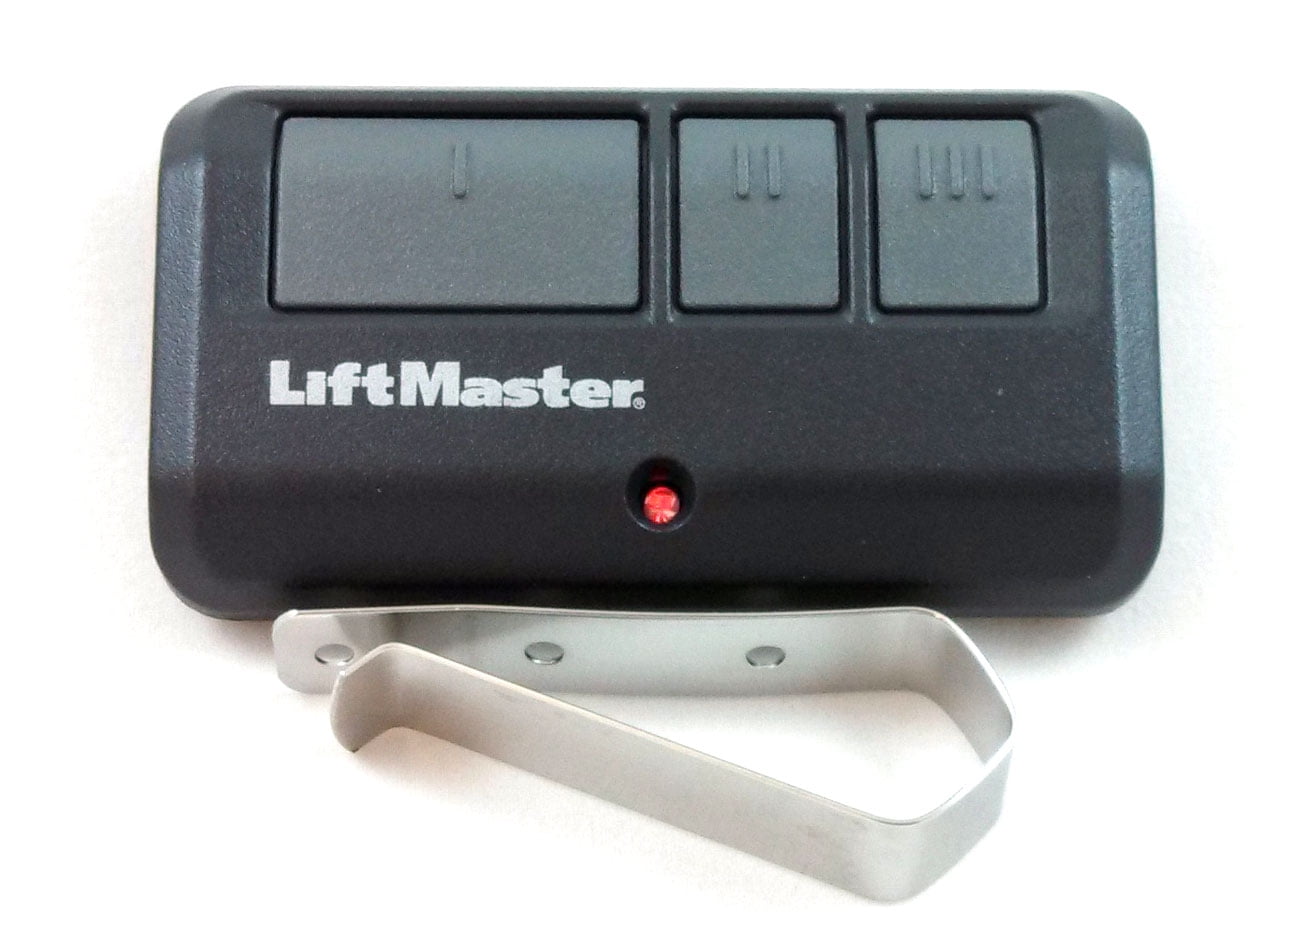 liftMaster 893MAX visor style garage door opener remote transmitter 371 971 973 